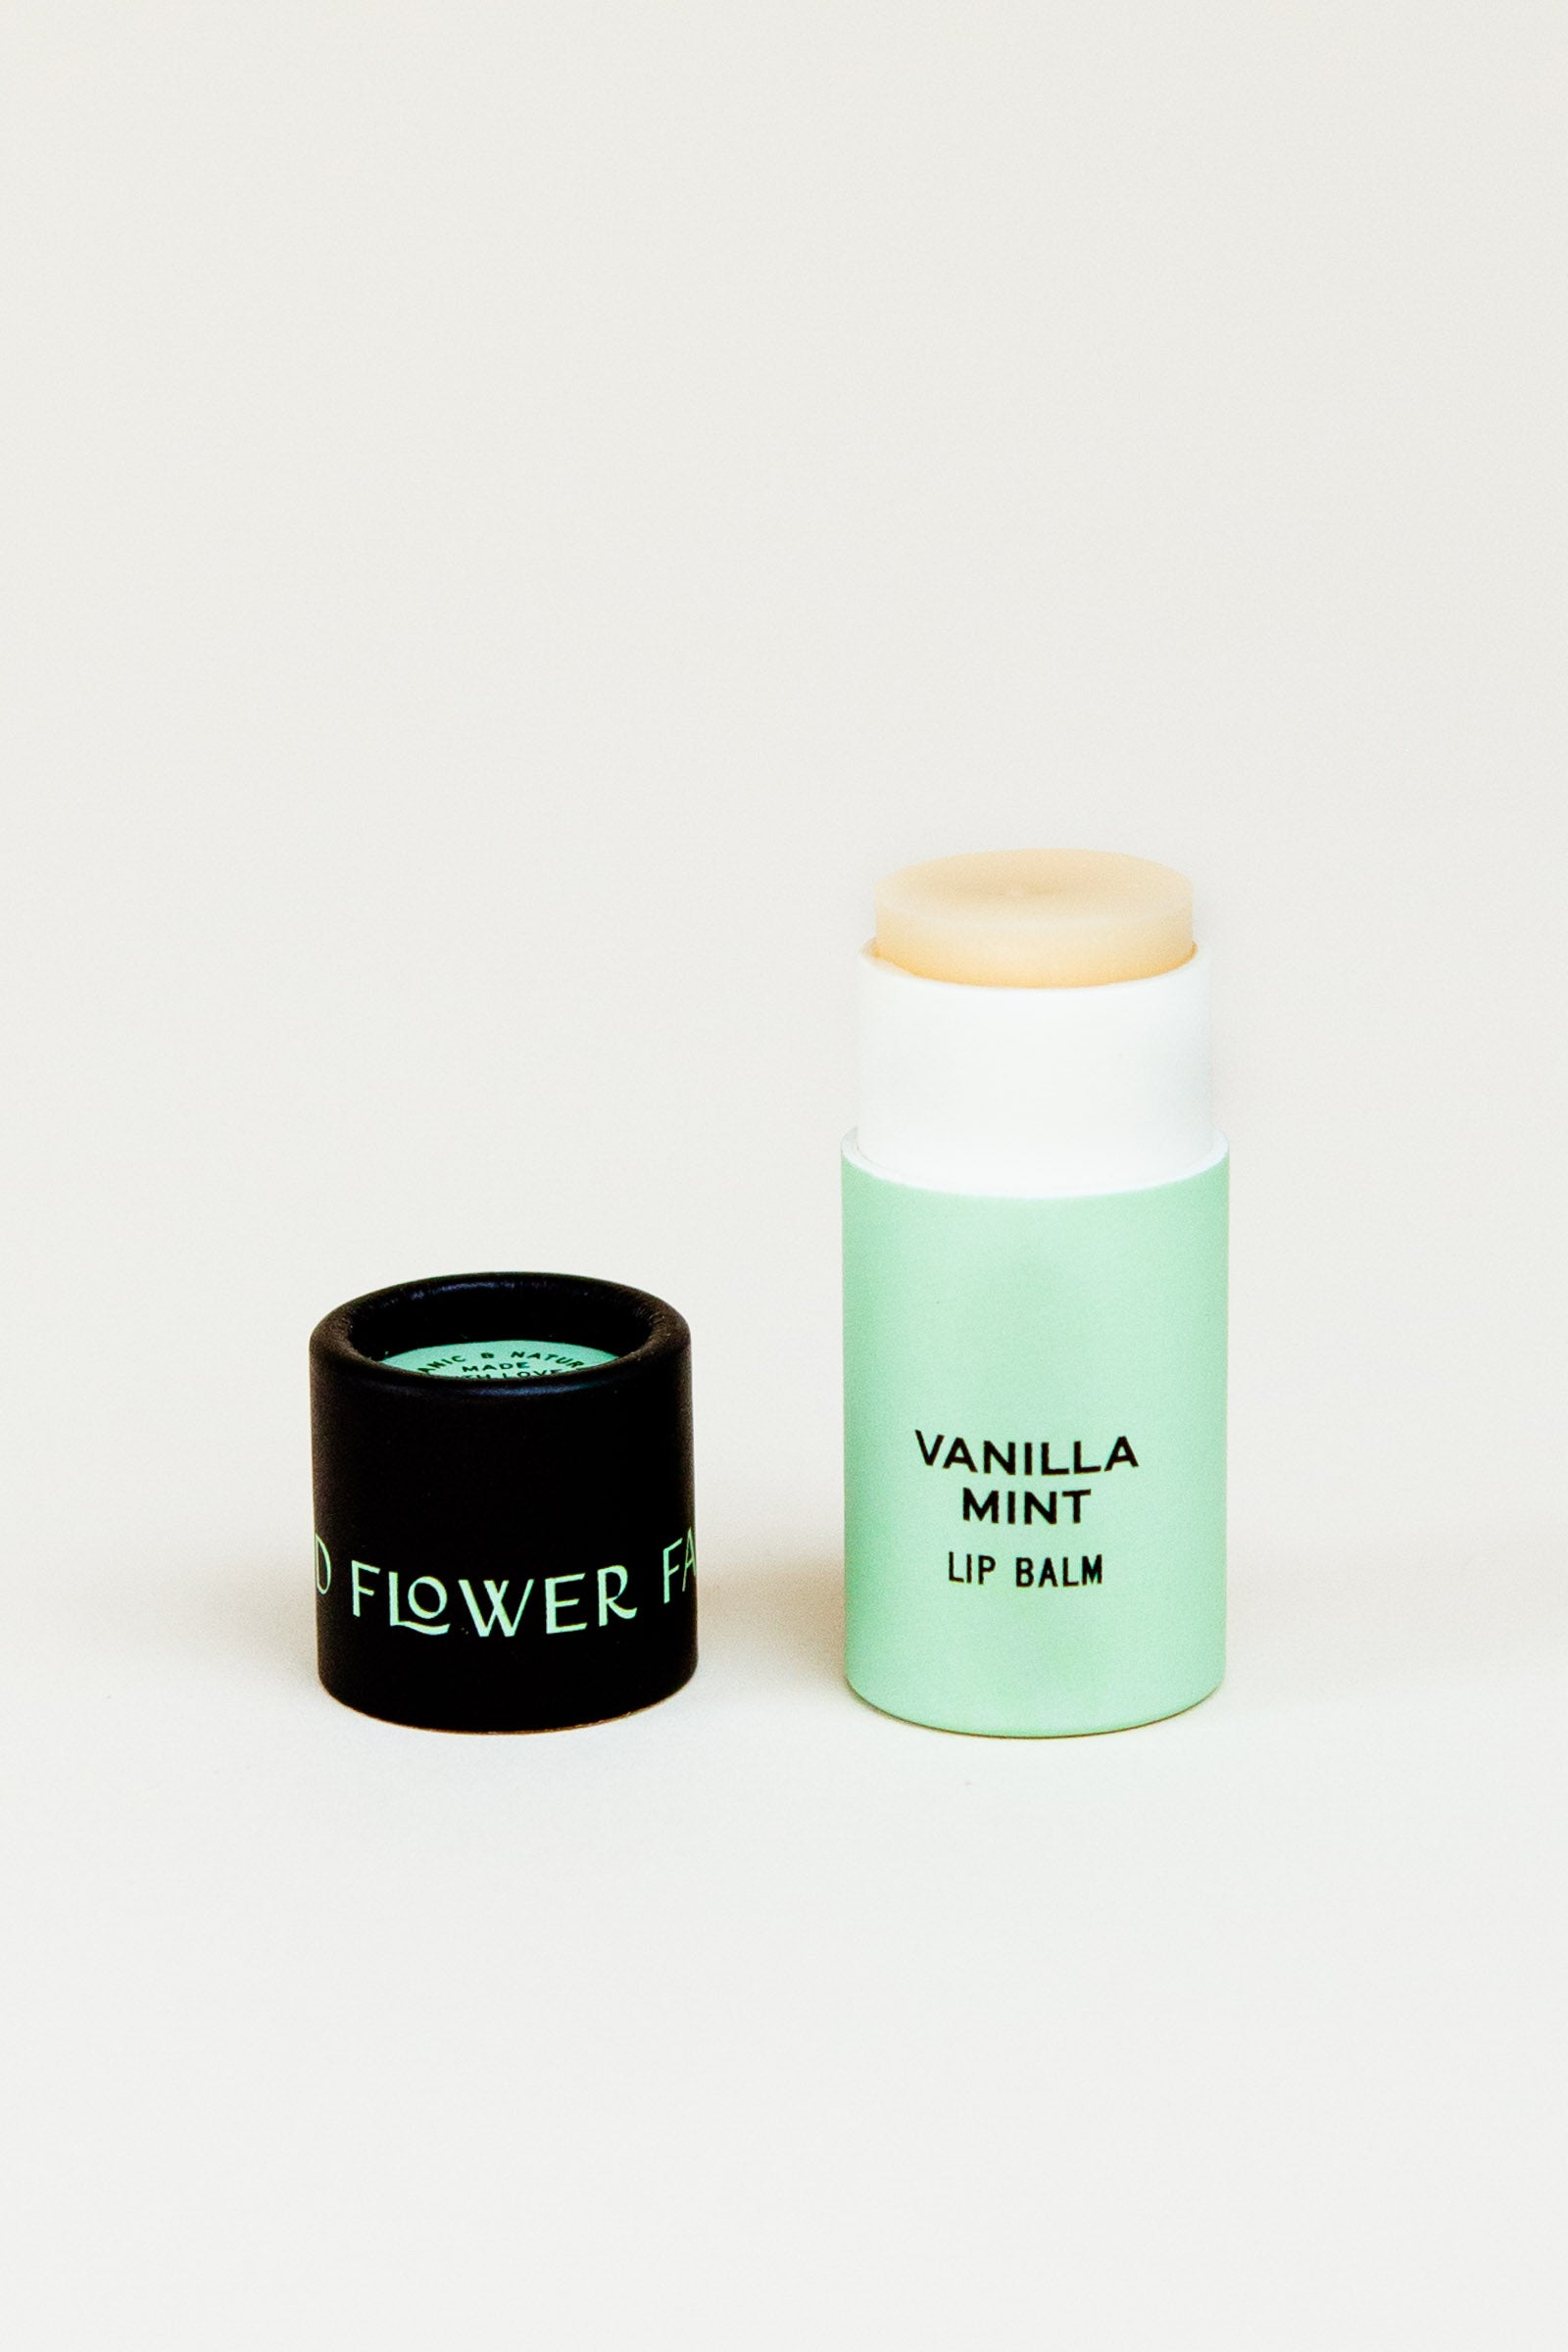 Organic vanilla mint lip balm in biodegradable plastic-free tube